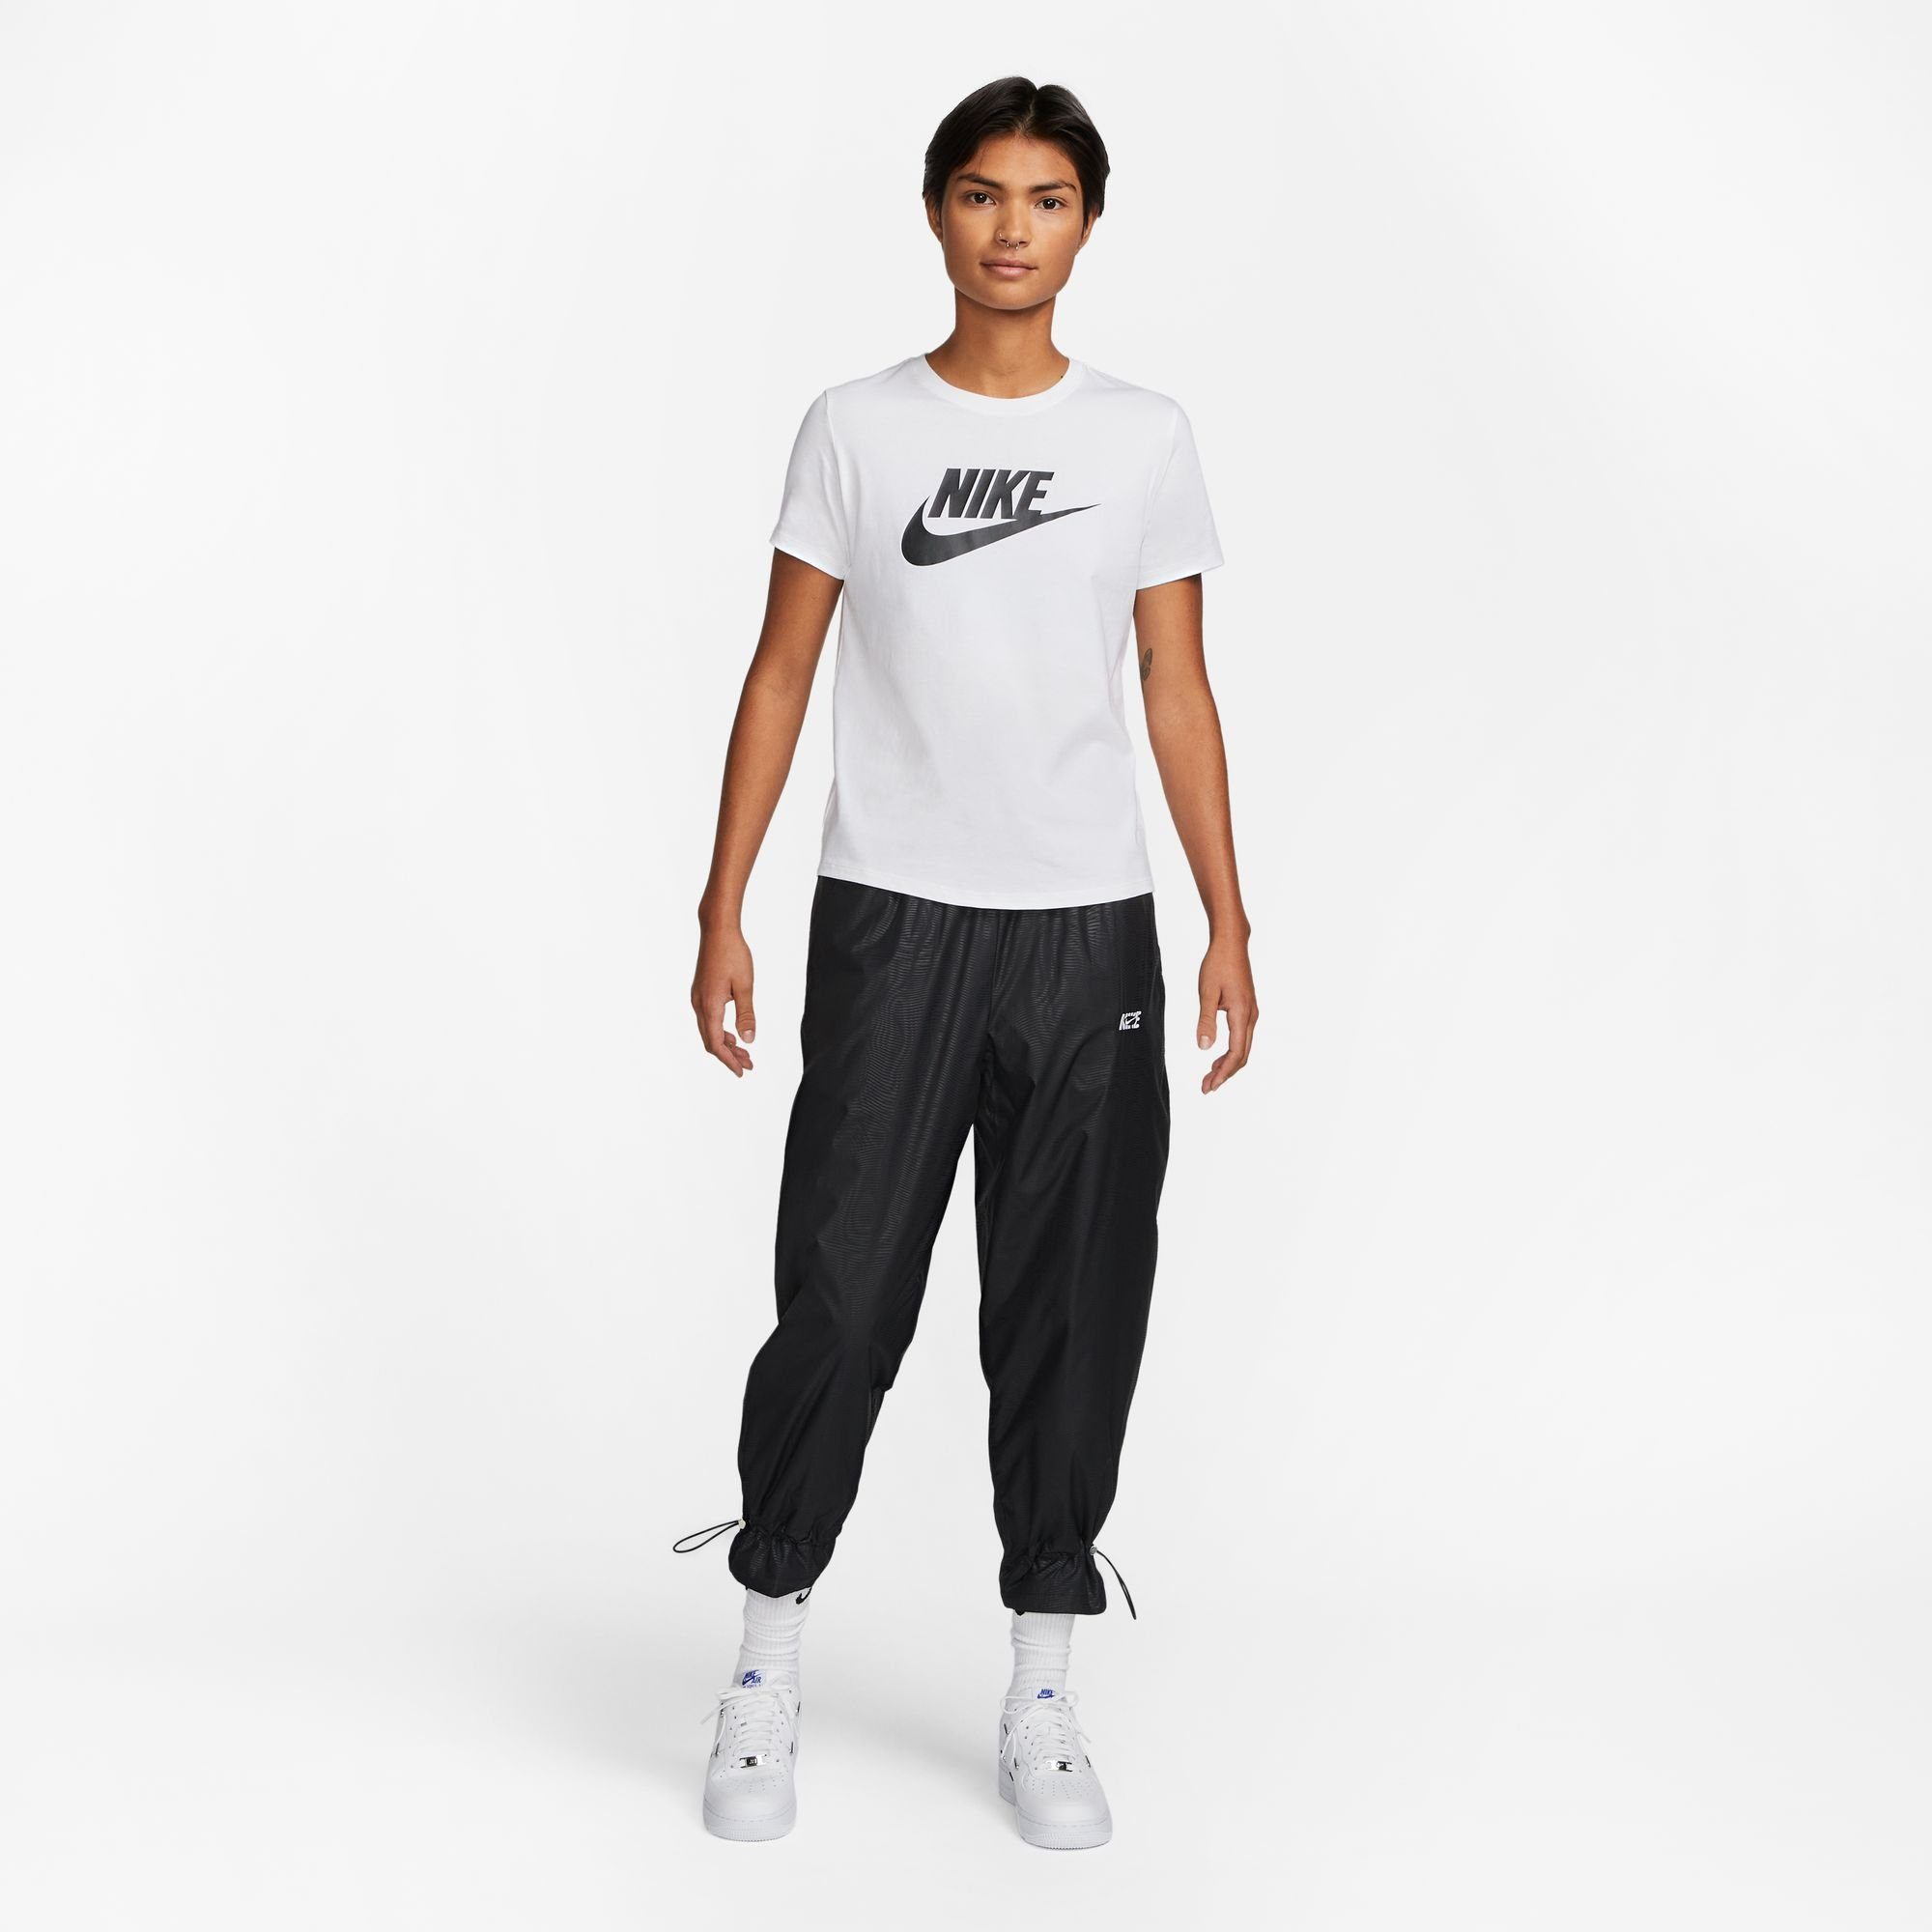 T-SHIRT WOMEN'S WHITE ESSENTIALS Nike LOGO Sportswear T-Shirt